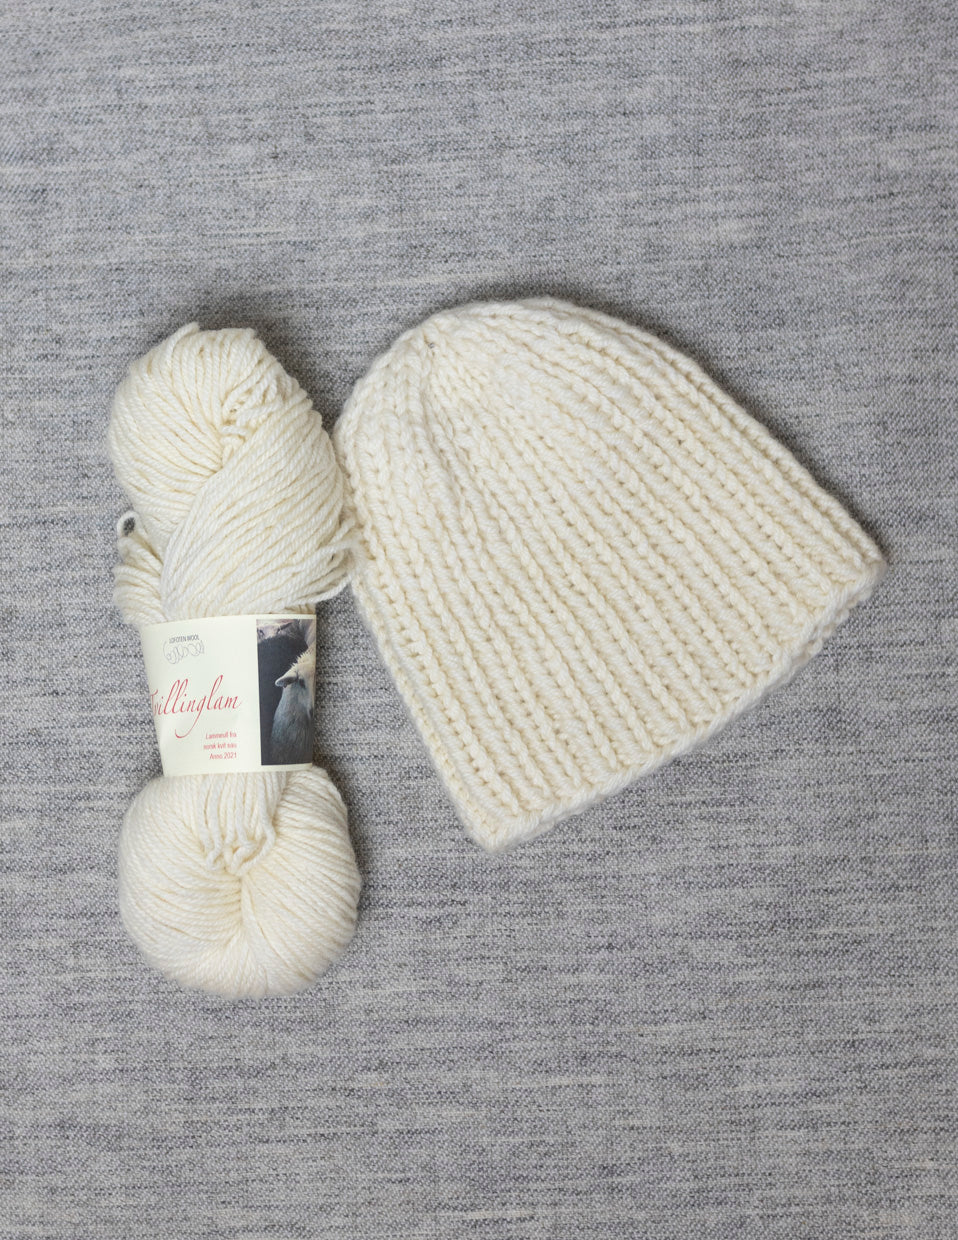 Tvillinglam beanie, fine lamb's wool, knitting kit